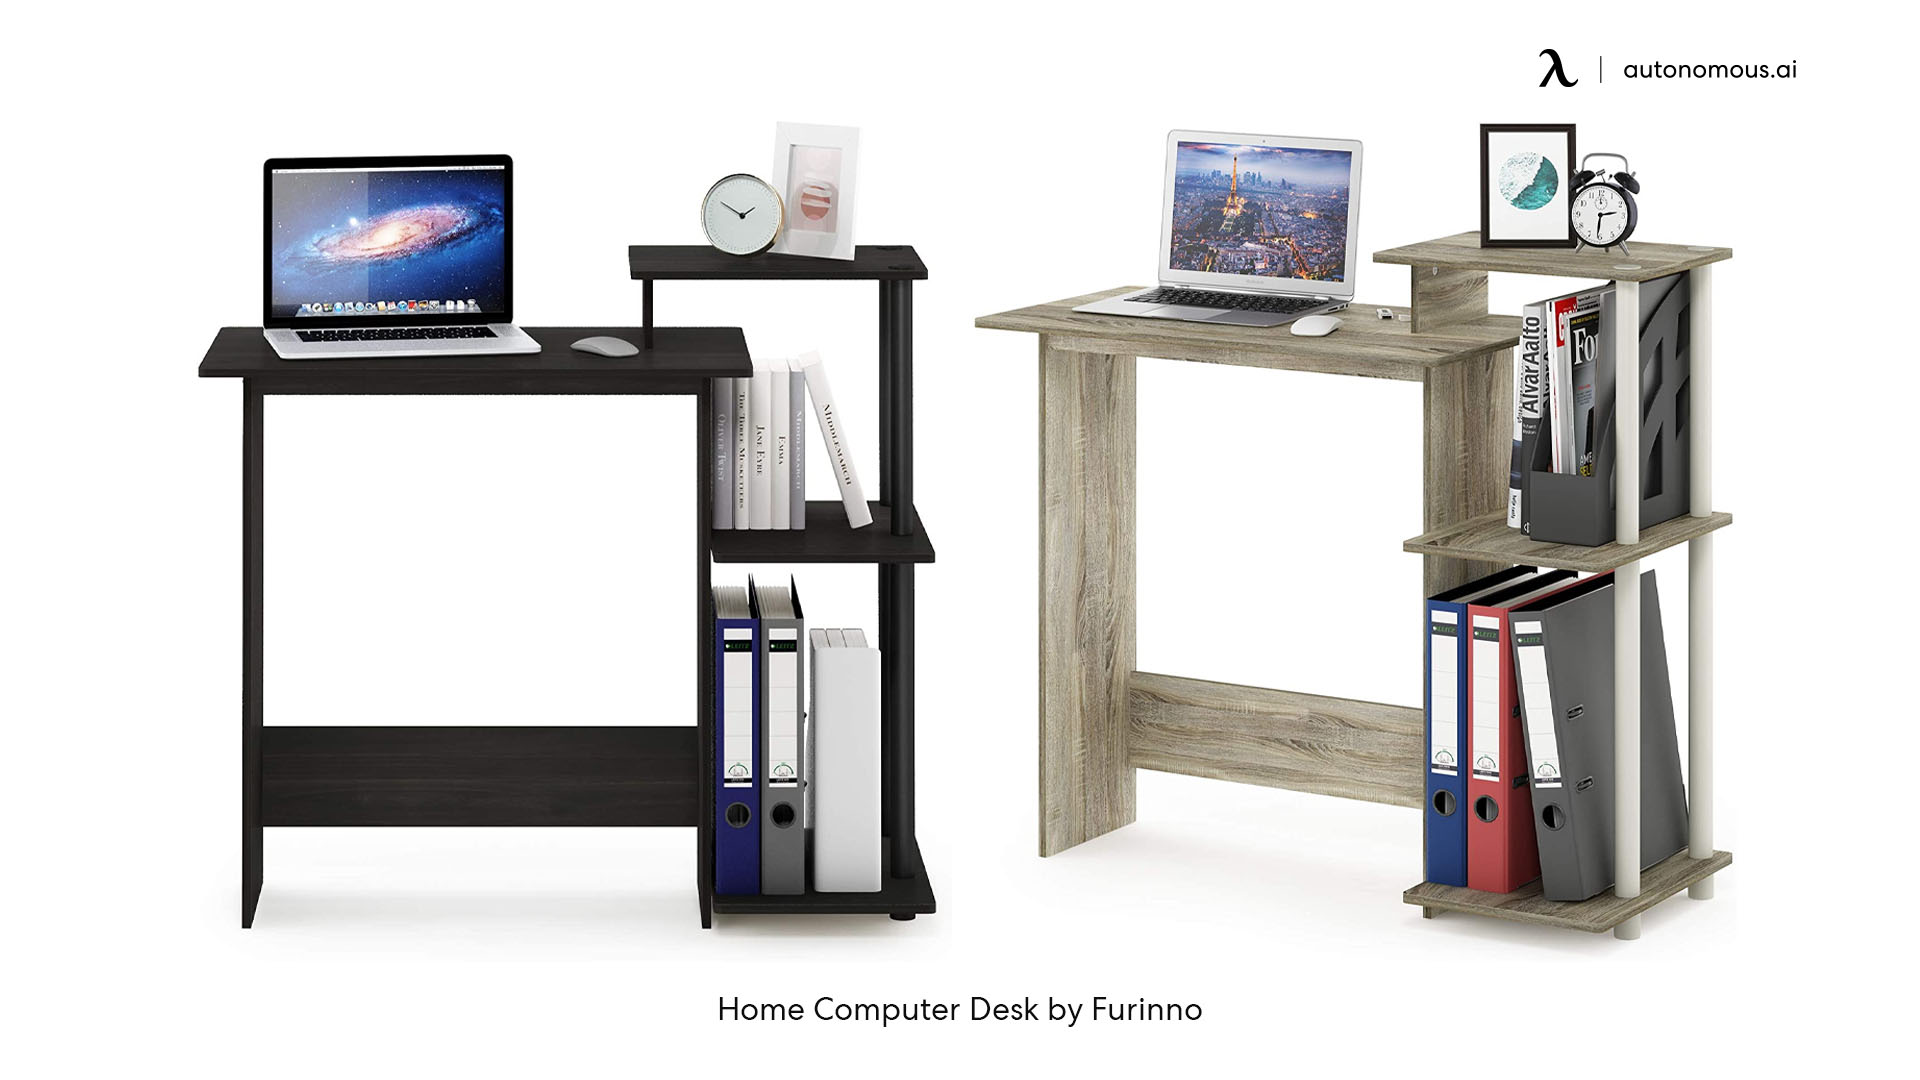 Home Computer Desk by Furinno